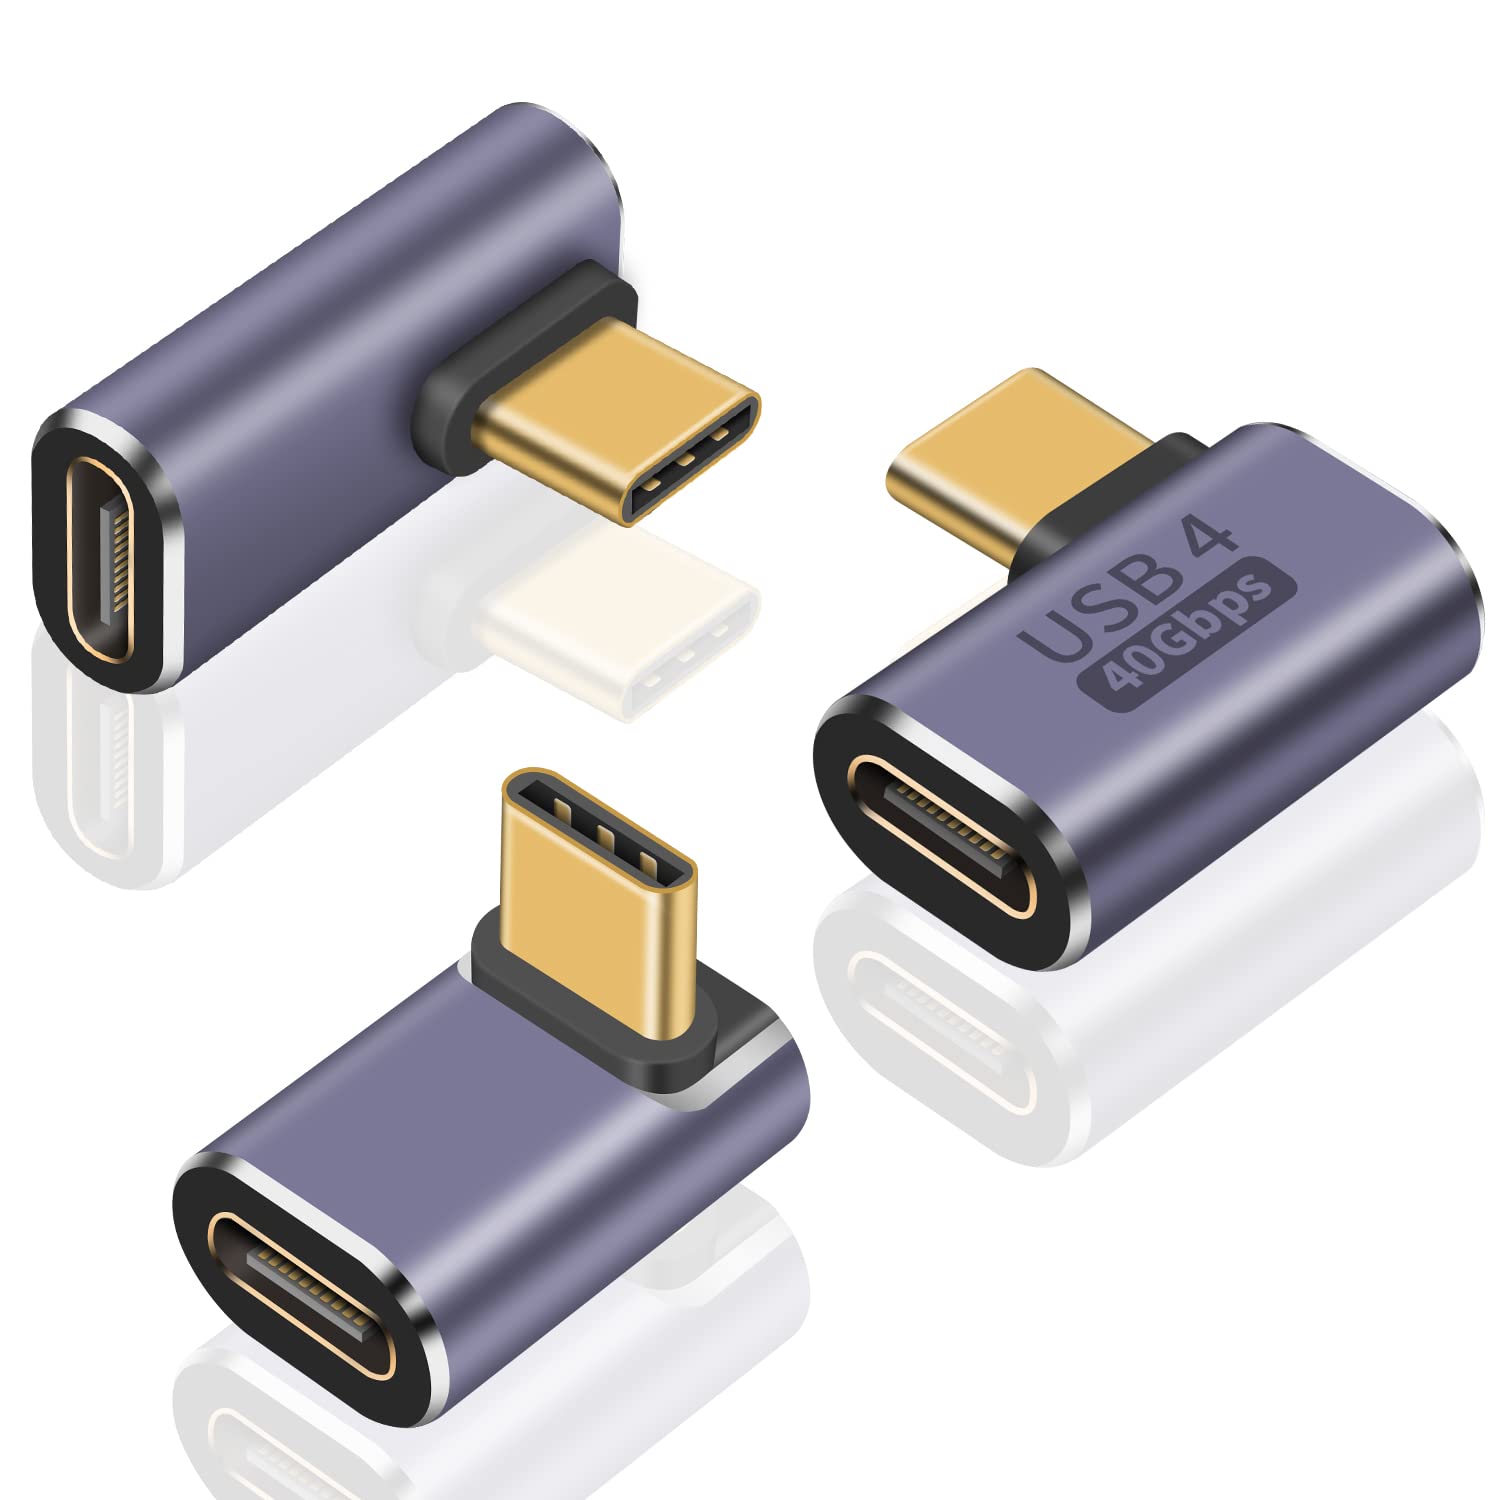 Duttek USB Type C 変換アダプタL字, 40Gbps USB C 変換アダプタ 90度L字L型USB Cオス対メスアダプタは8k@60HZと100W 5Aの急速充電をサポート、Thunderbolt 3/4とUSB Type Cインターフェースデバイスと互換性がある。(3種類)適格請求書行可